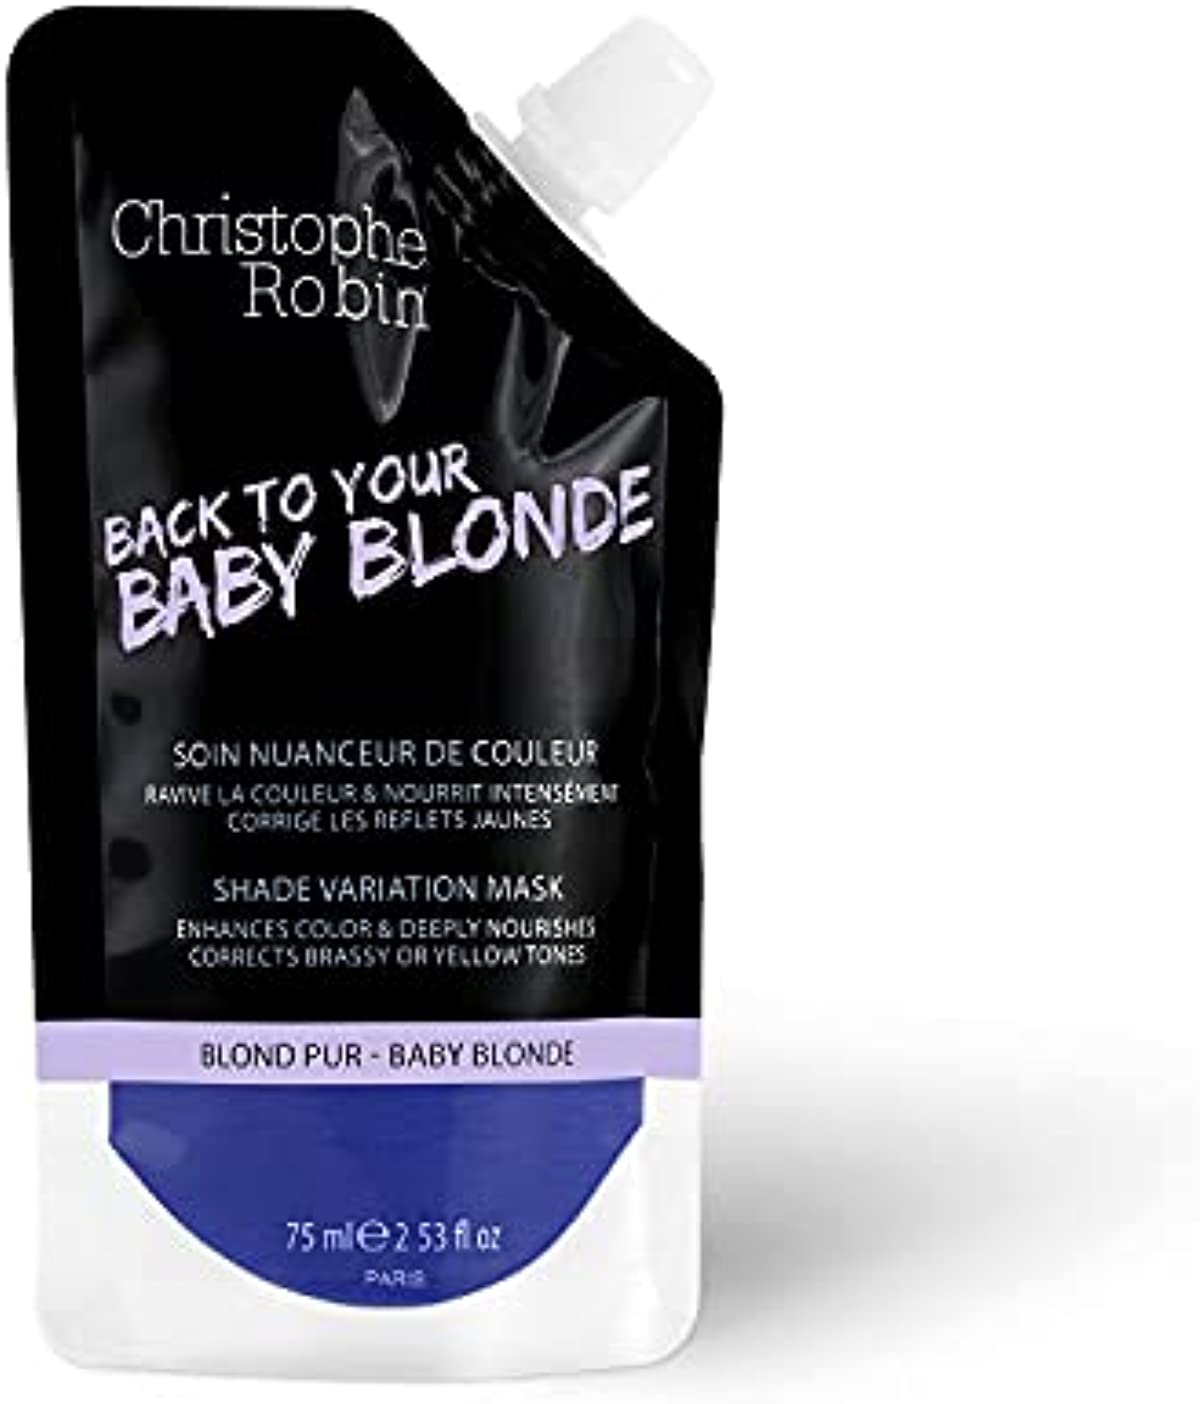 Christophe Robin Shade Variation Mask - Baby Blonde Travel Size, 2.53 fl. oz